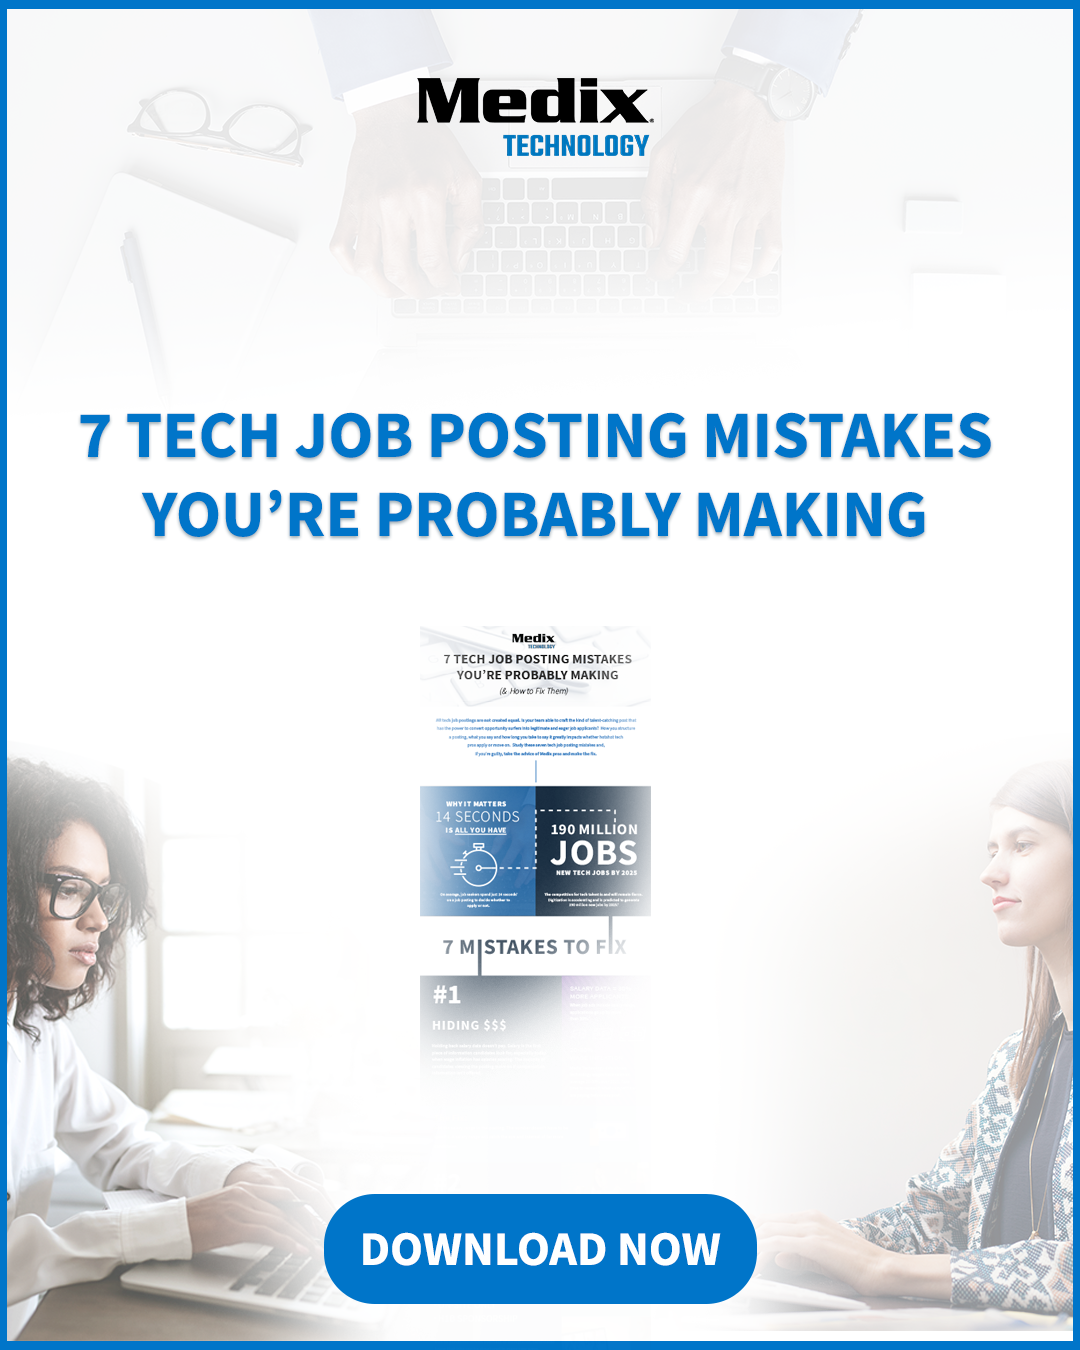 Medix Technology  - 7 Job Posting Mistakes Infographic - Social Media Graphic